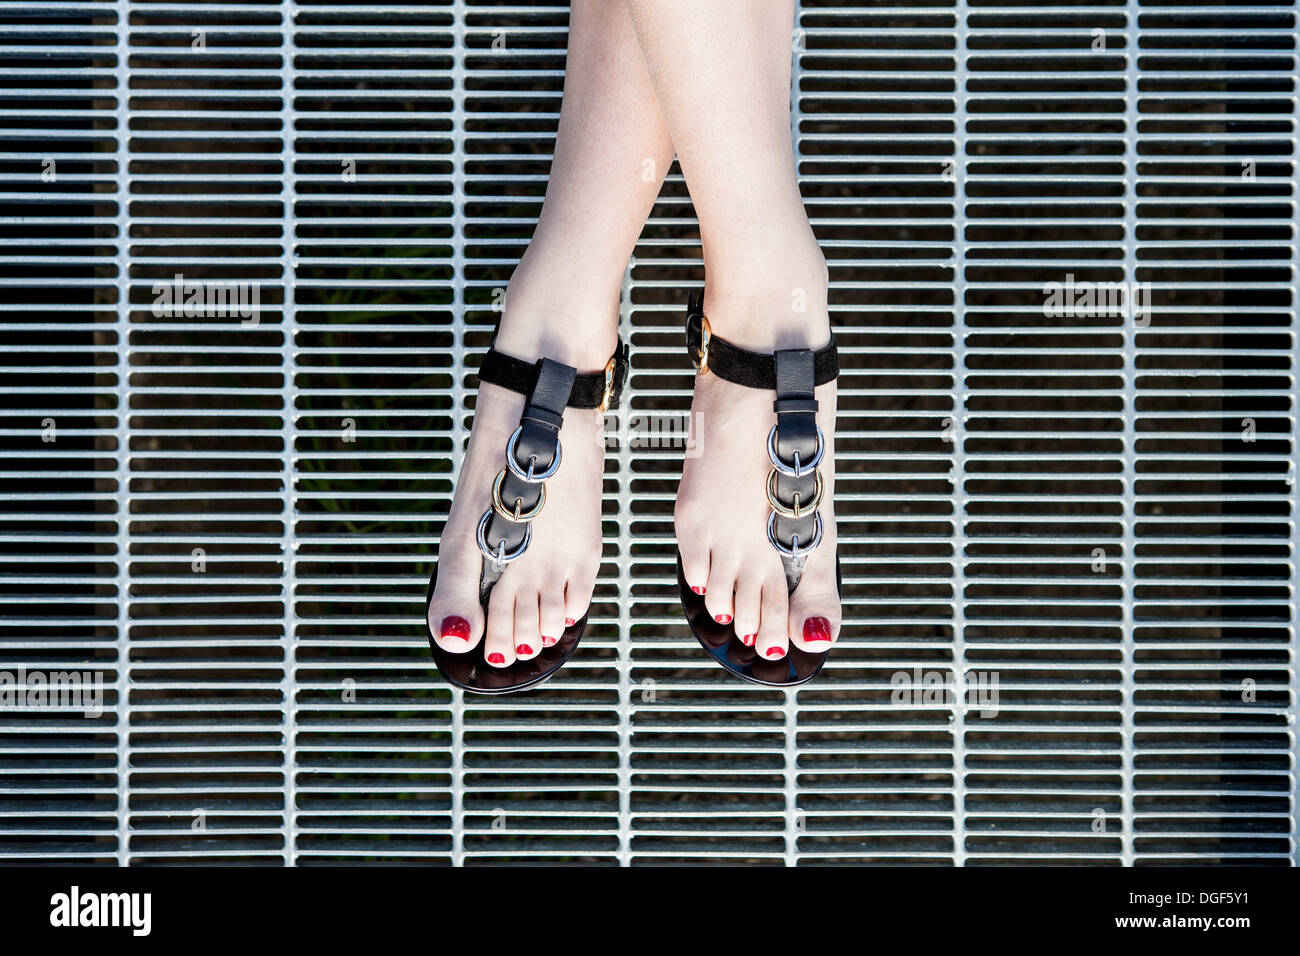 Un modelo femenino llevaba sandalias de cuero negro. Foto de stock